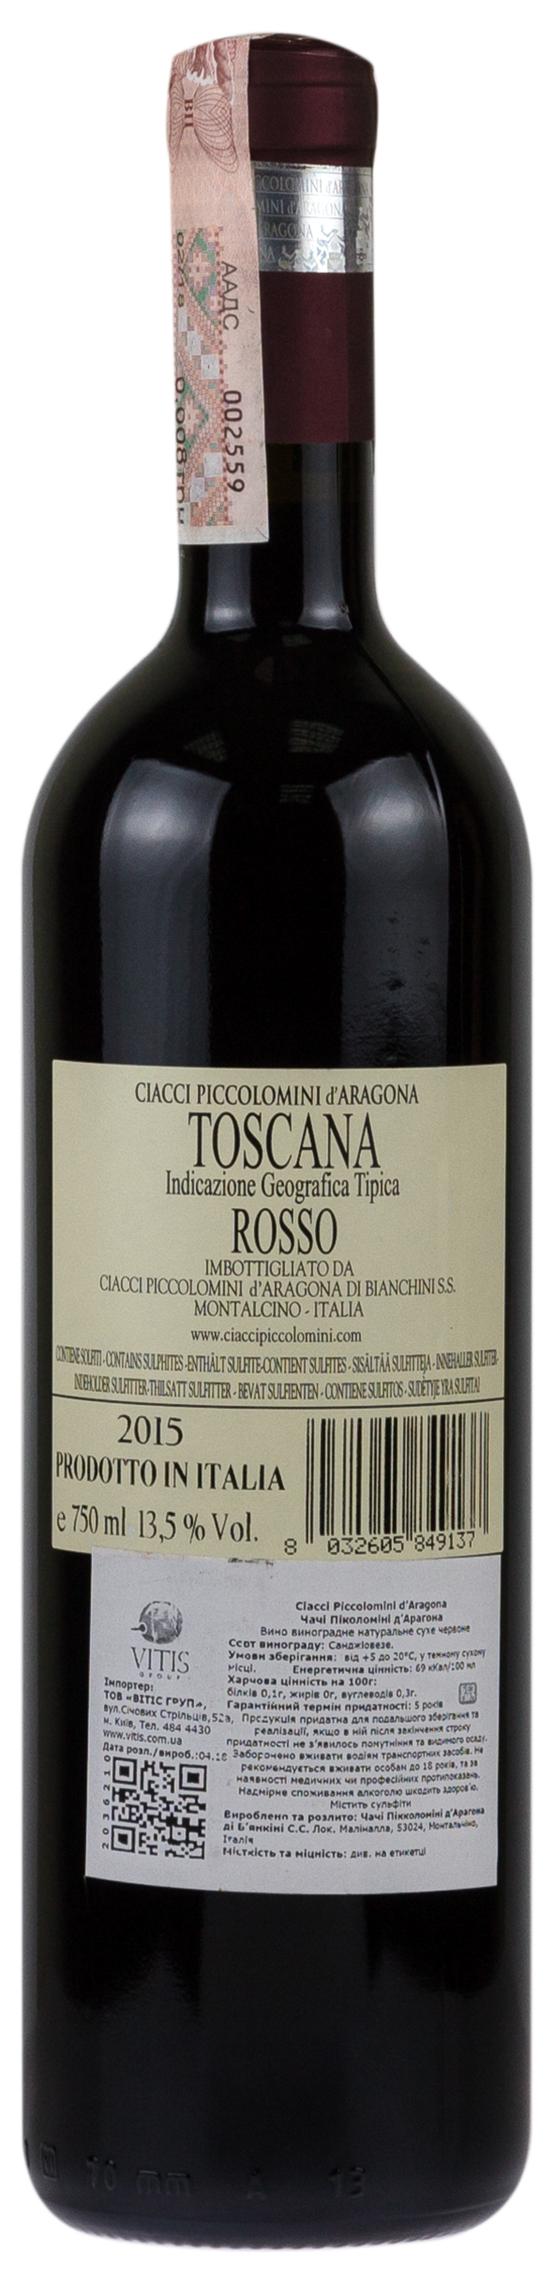 Ciacci Piccolomini d'Aragona Rosso 2015 Set 6 Bottles - 2